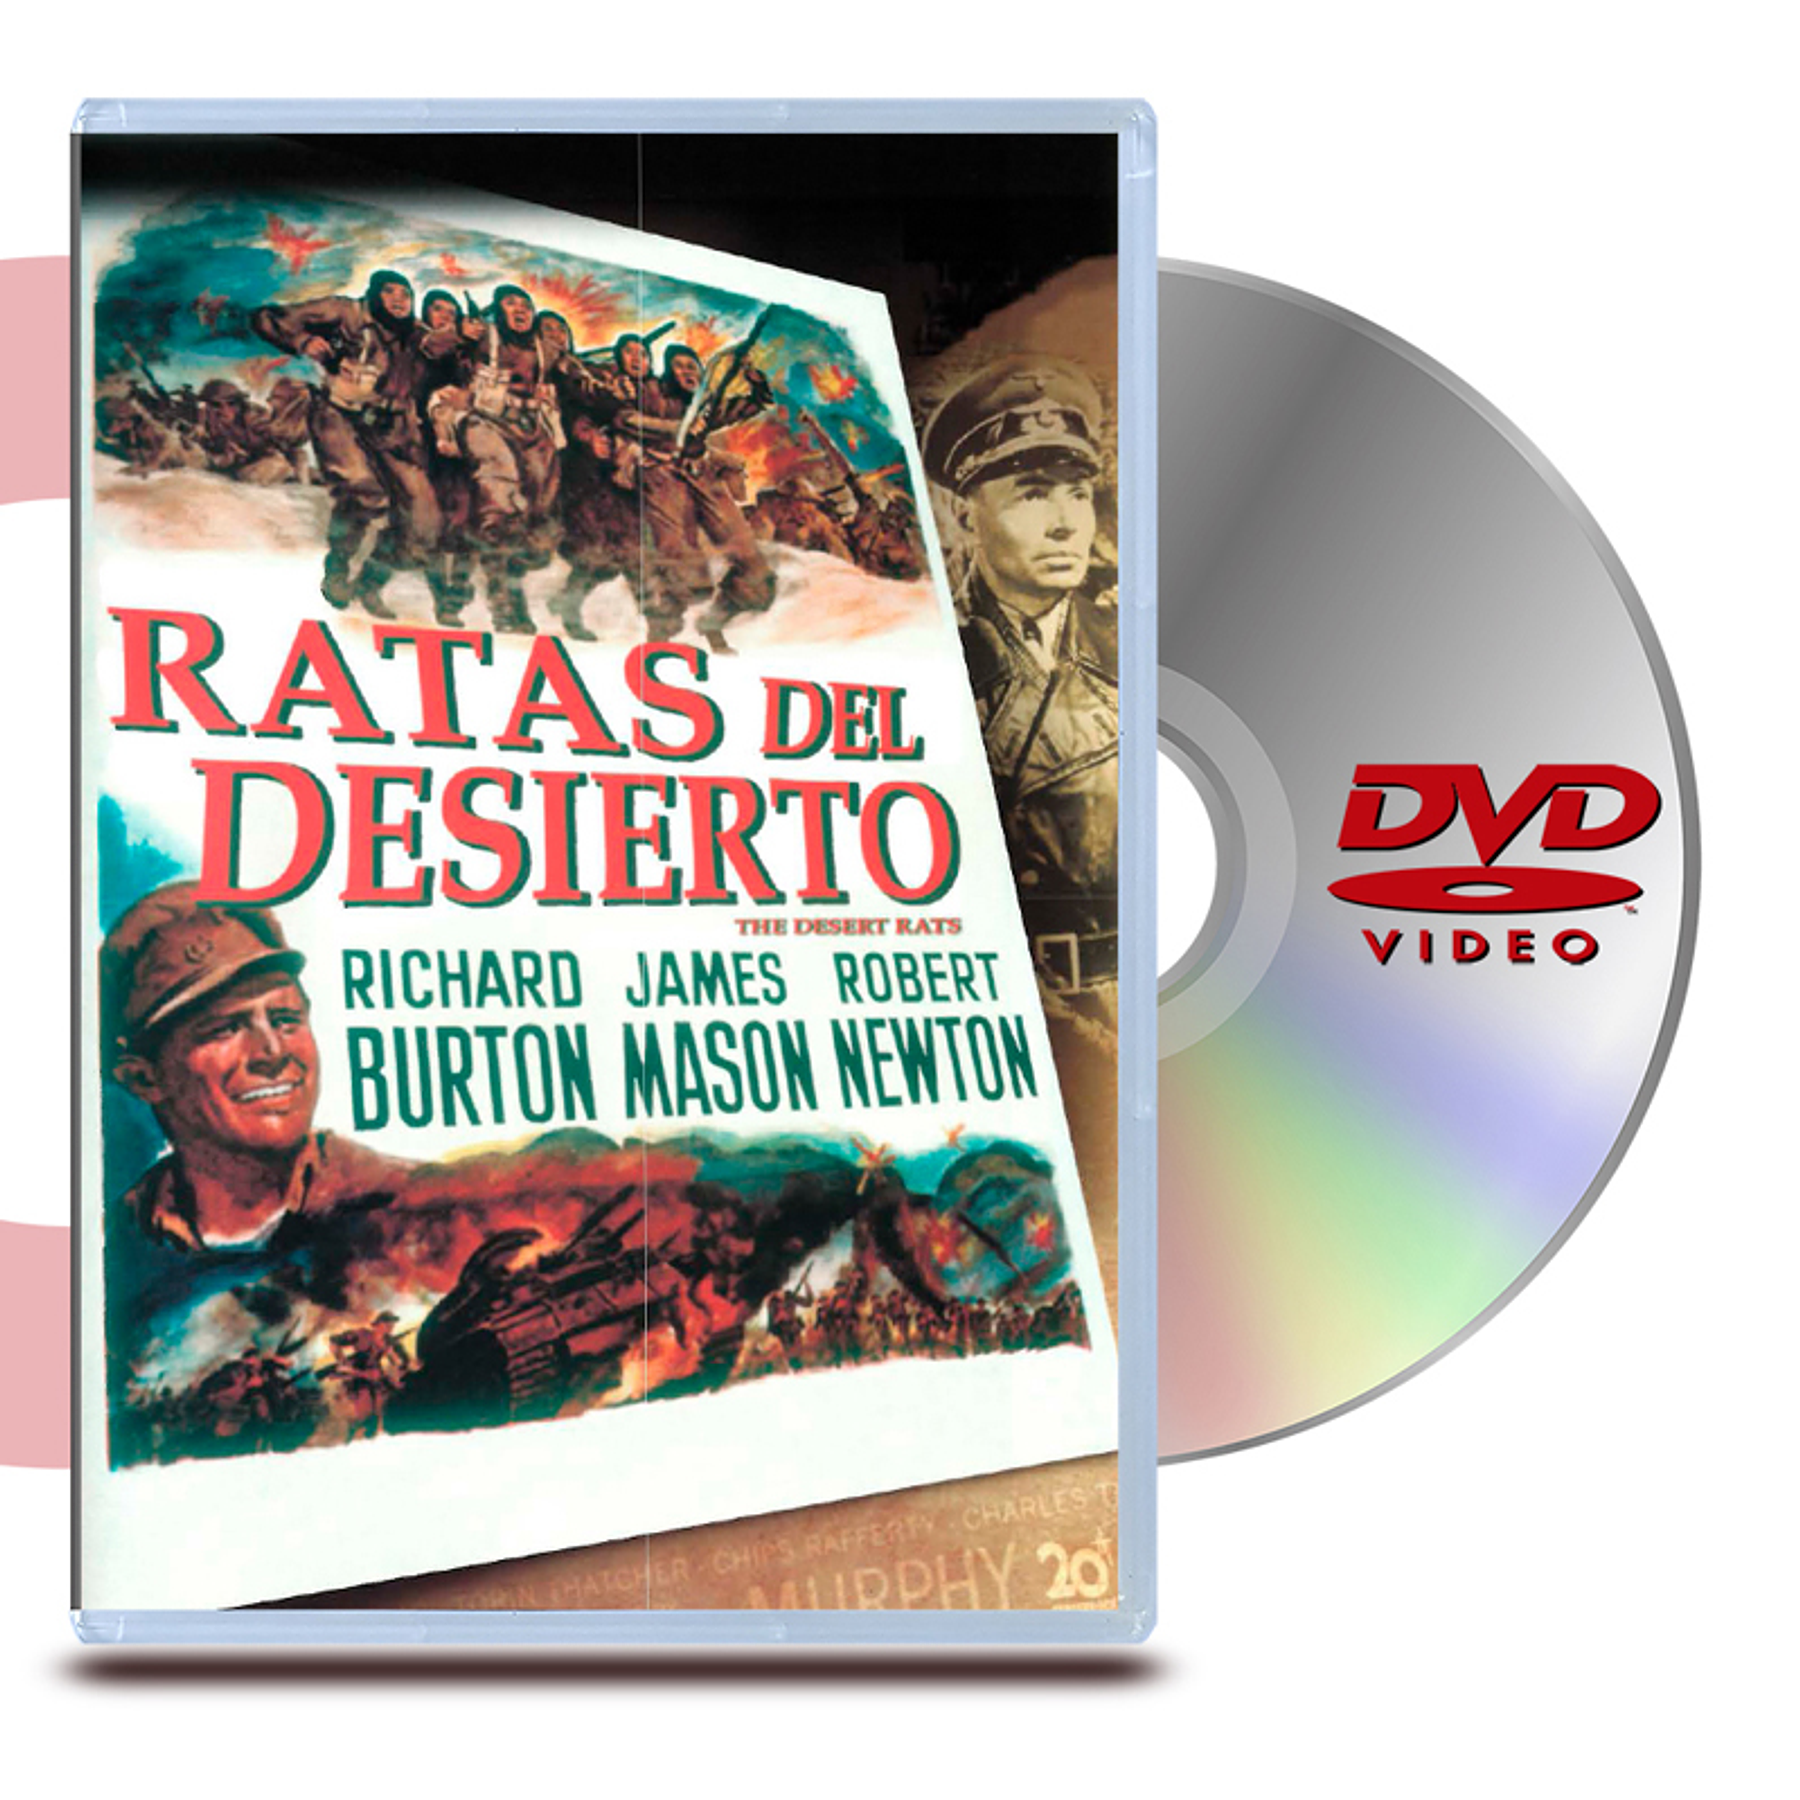 DVD RATAS DEL DESIERTO